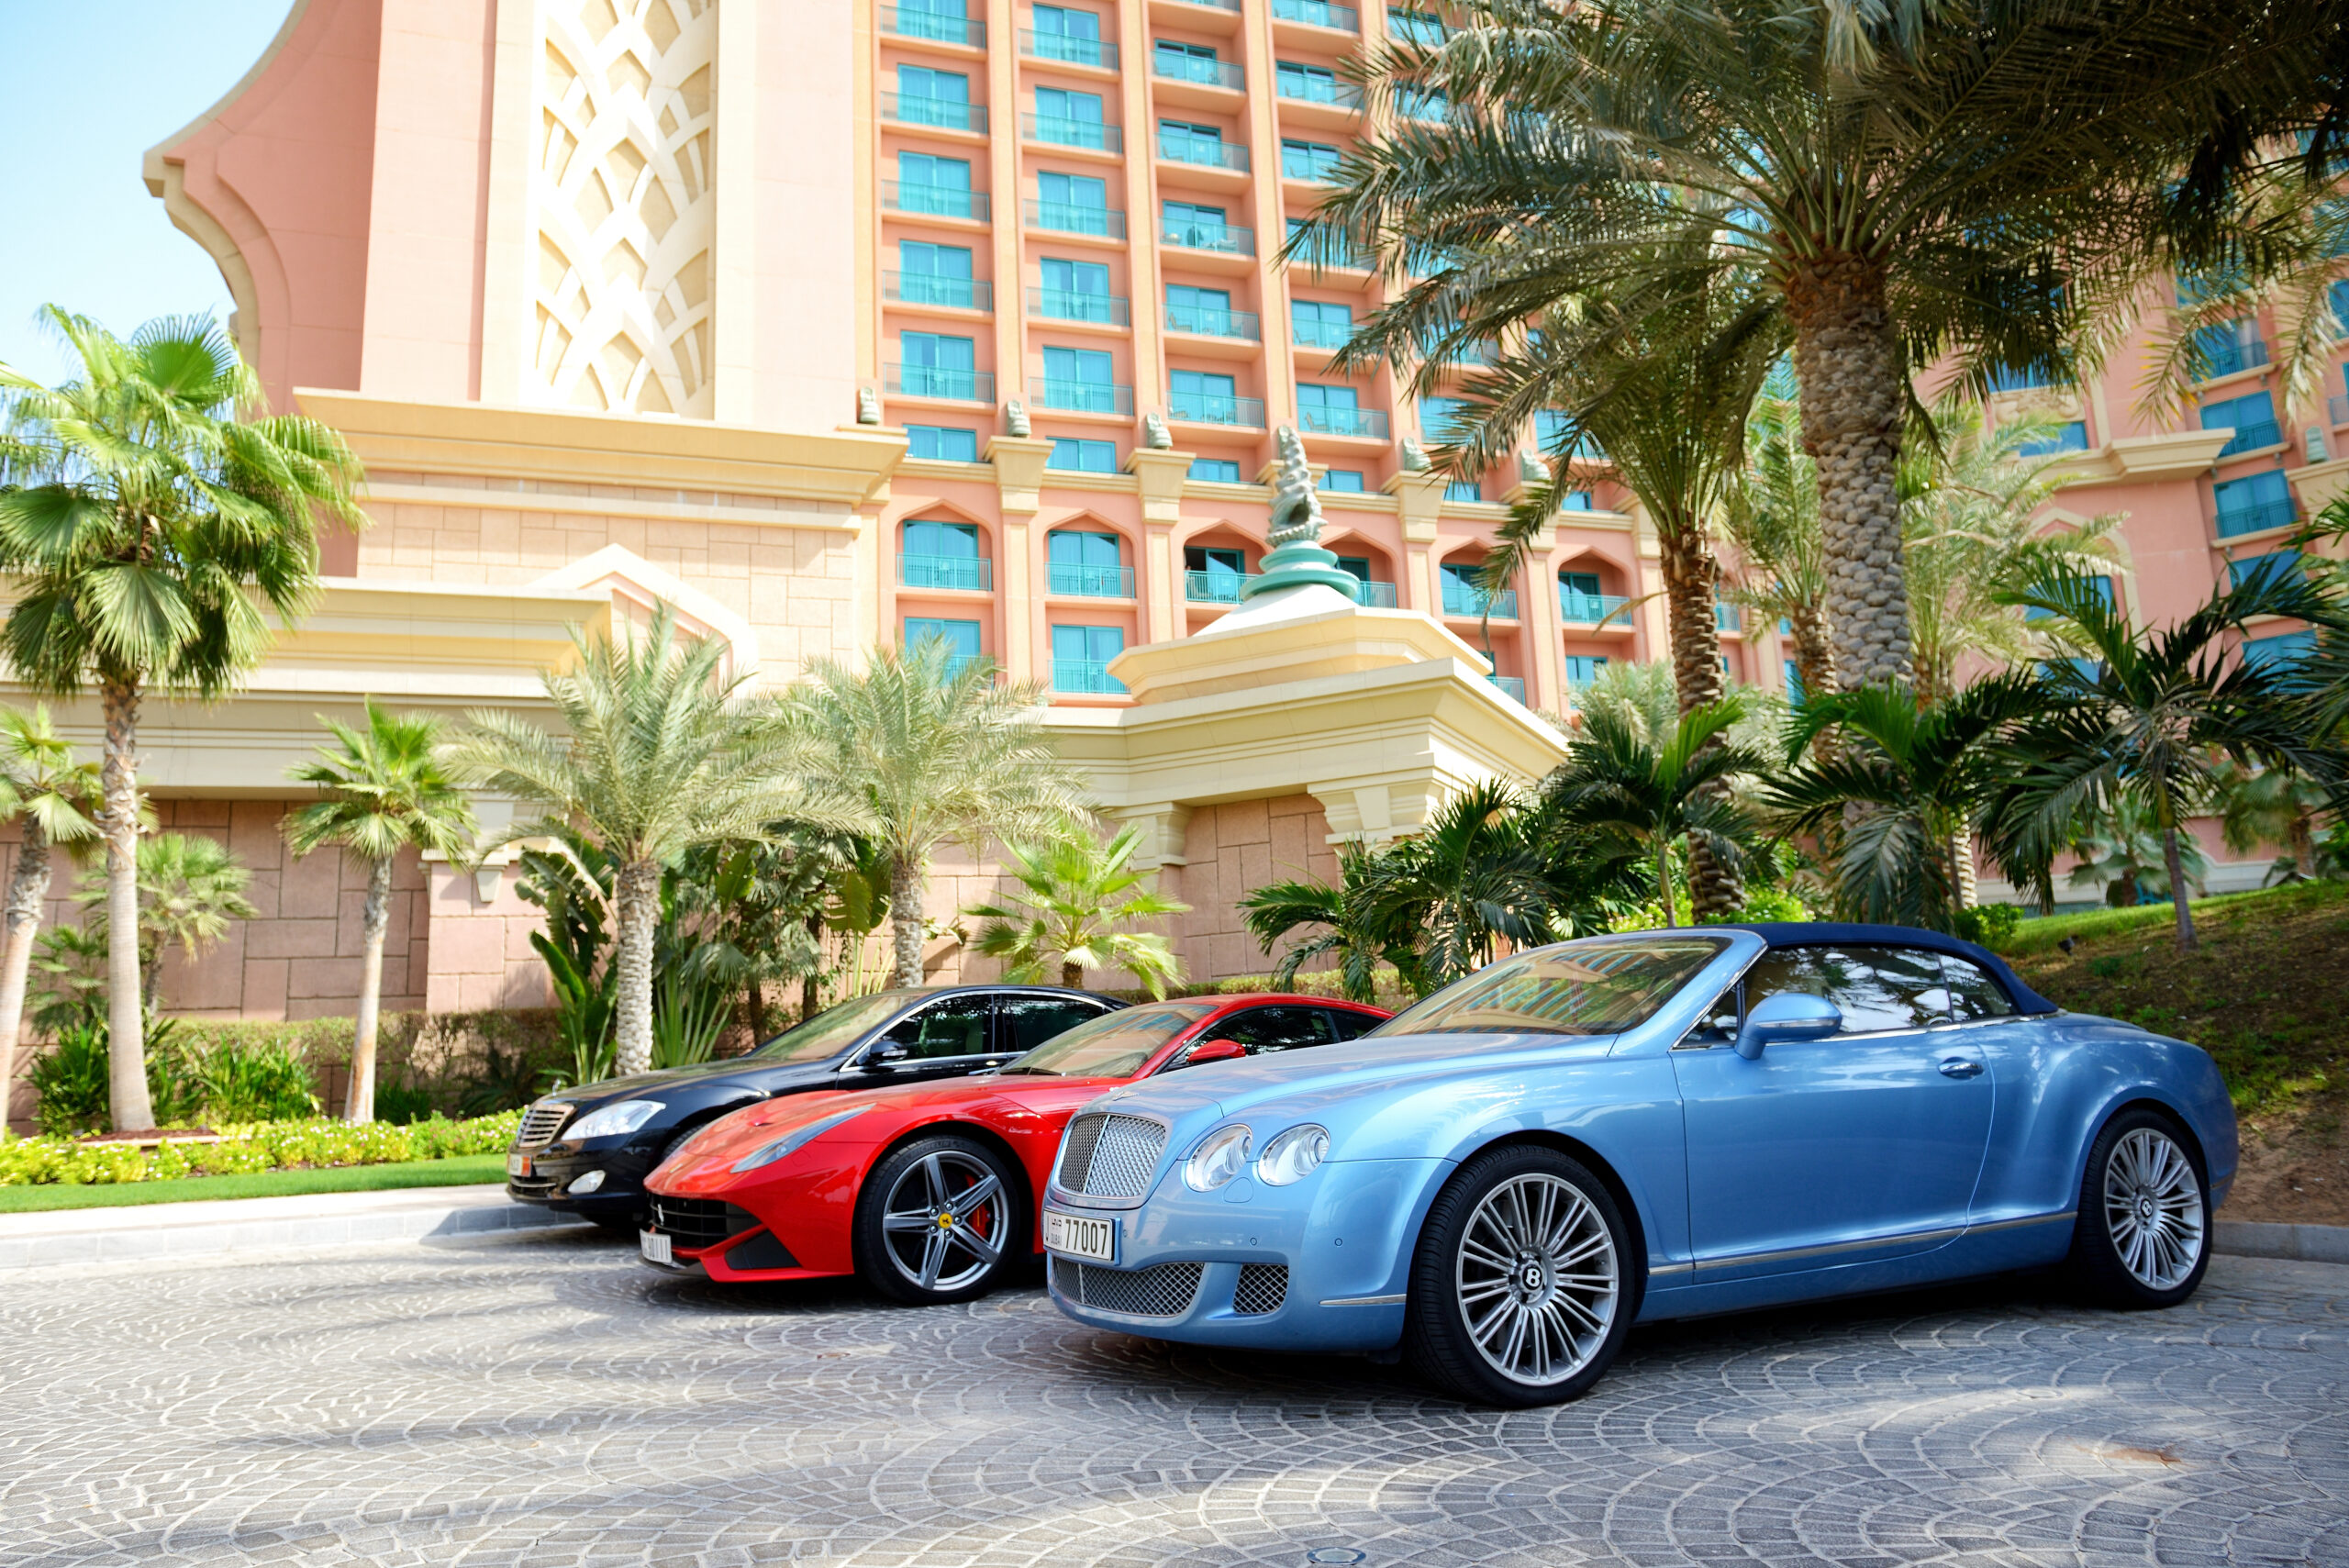 Rent a car in Dubai - Luxury cars